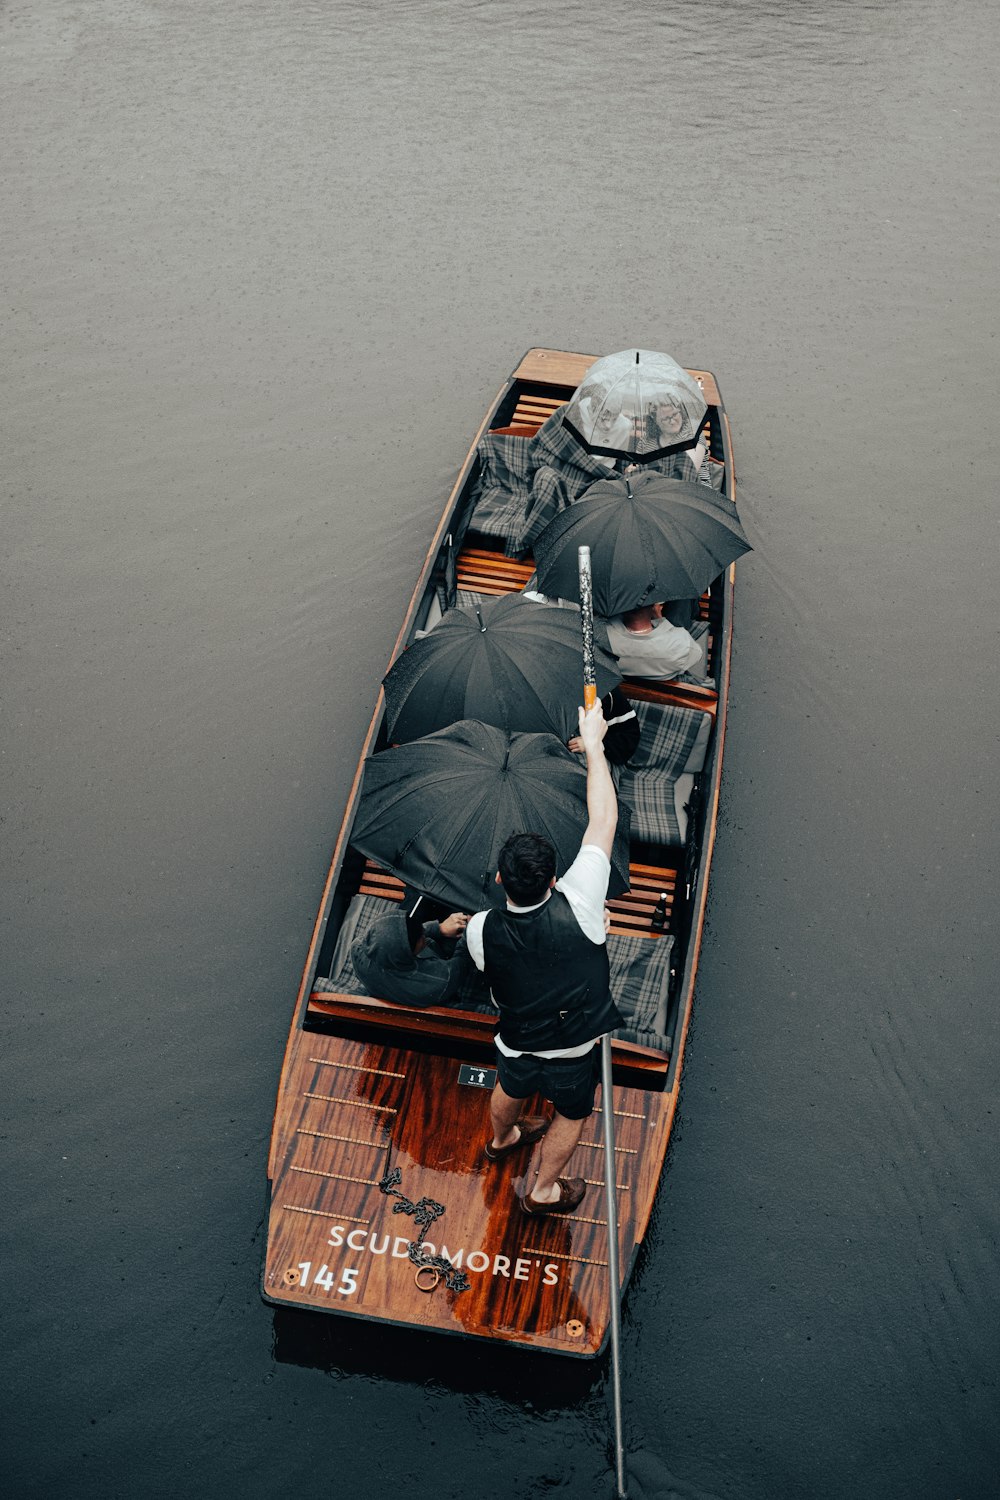 Un grupo de personas en un barco